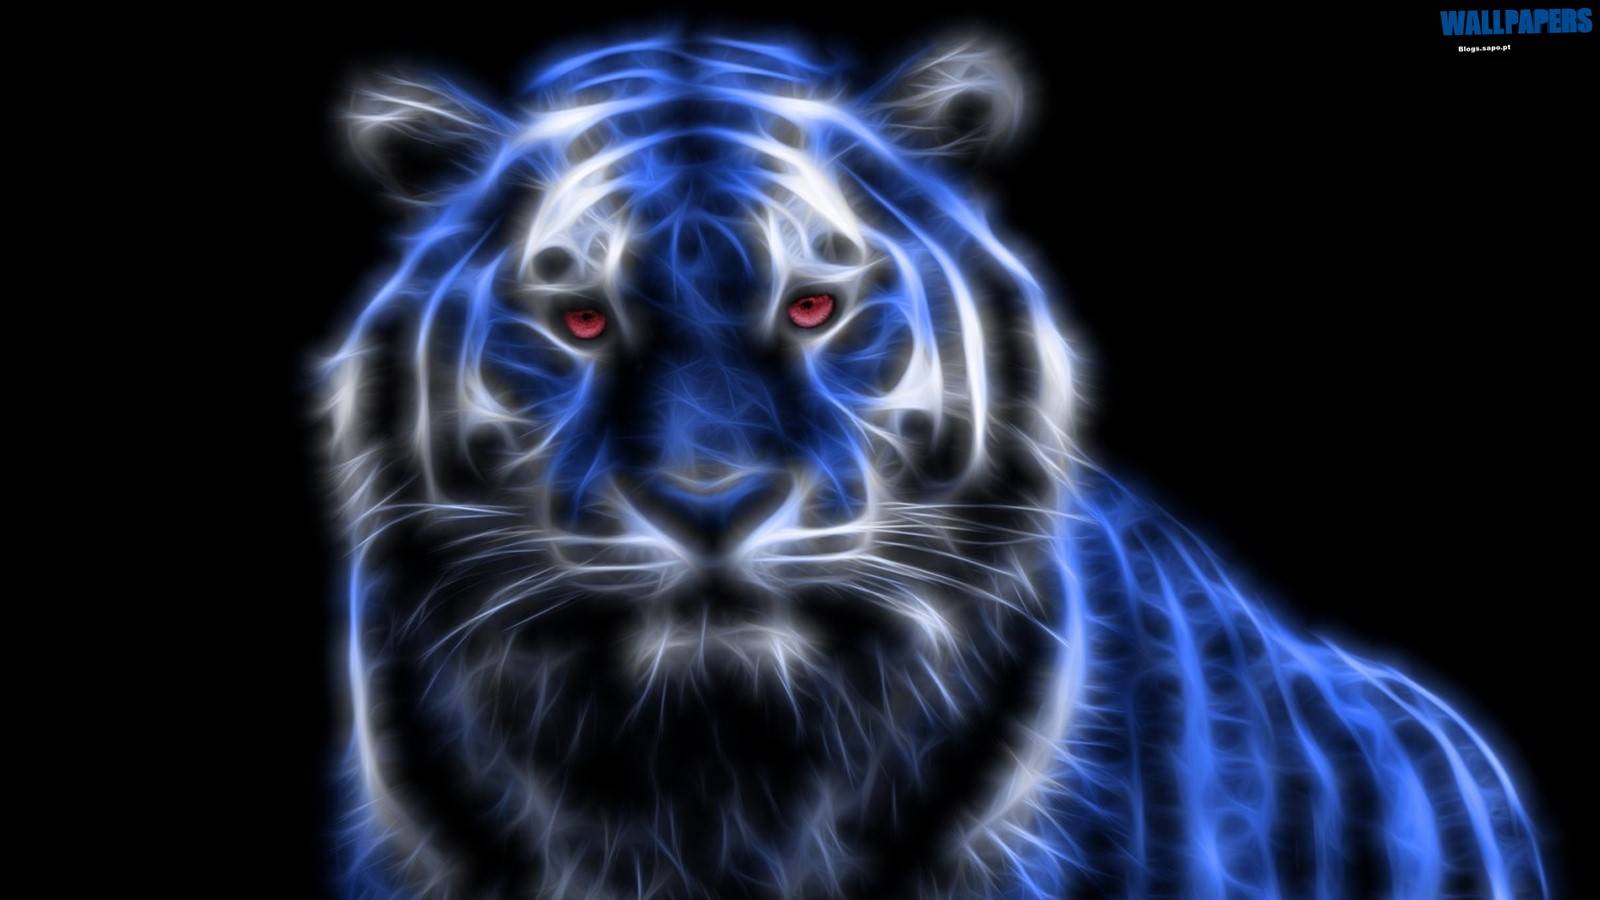 Blue glowing tiger wallpaper 1600×900. Wallpaper 29 HD